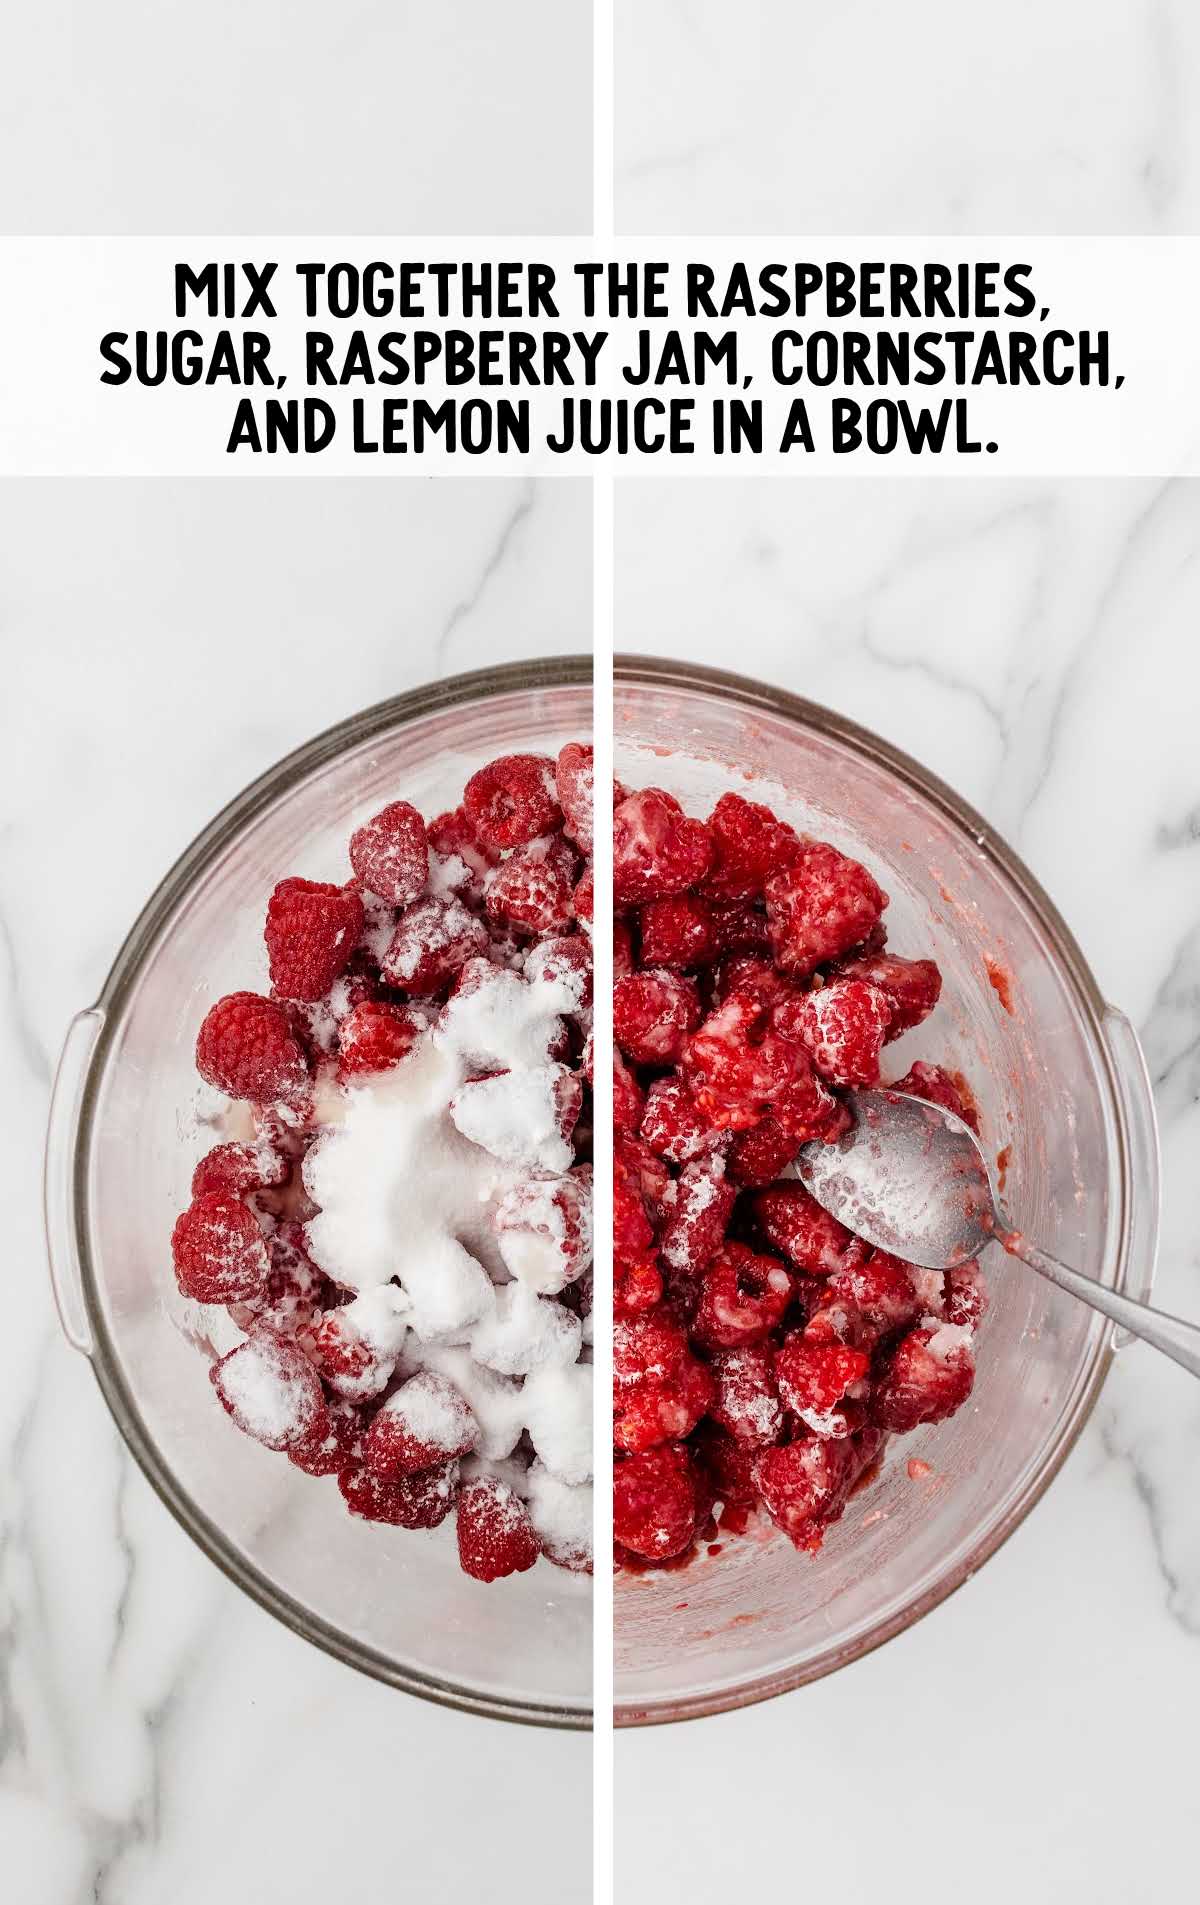 raspberries, sugar, raspberry jam, cornstarch, and lemon juice added to a bowl